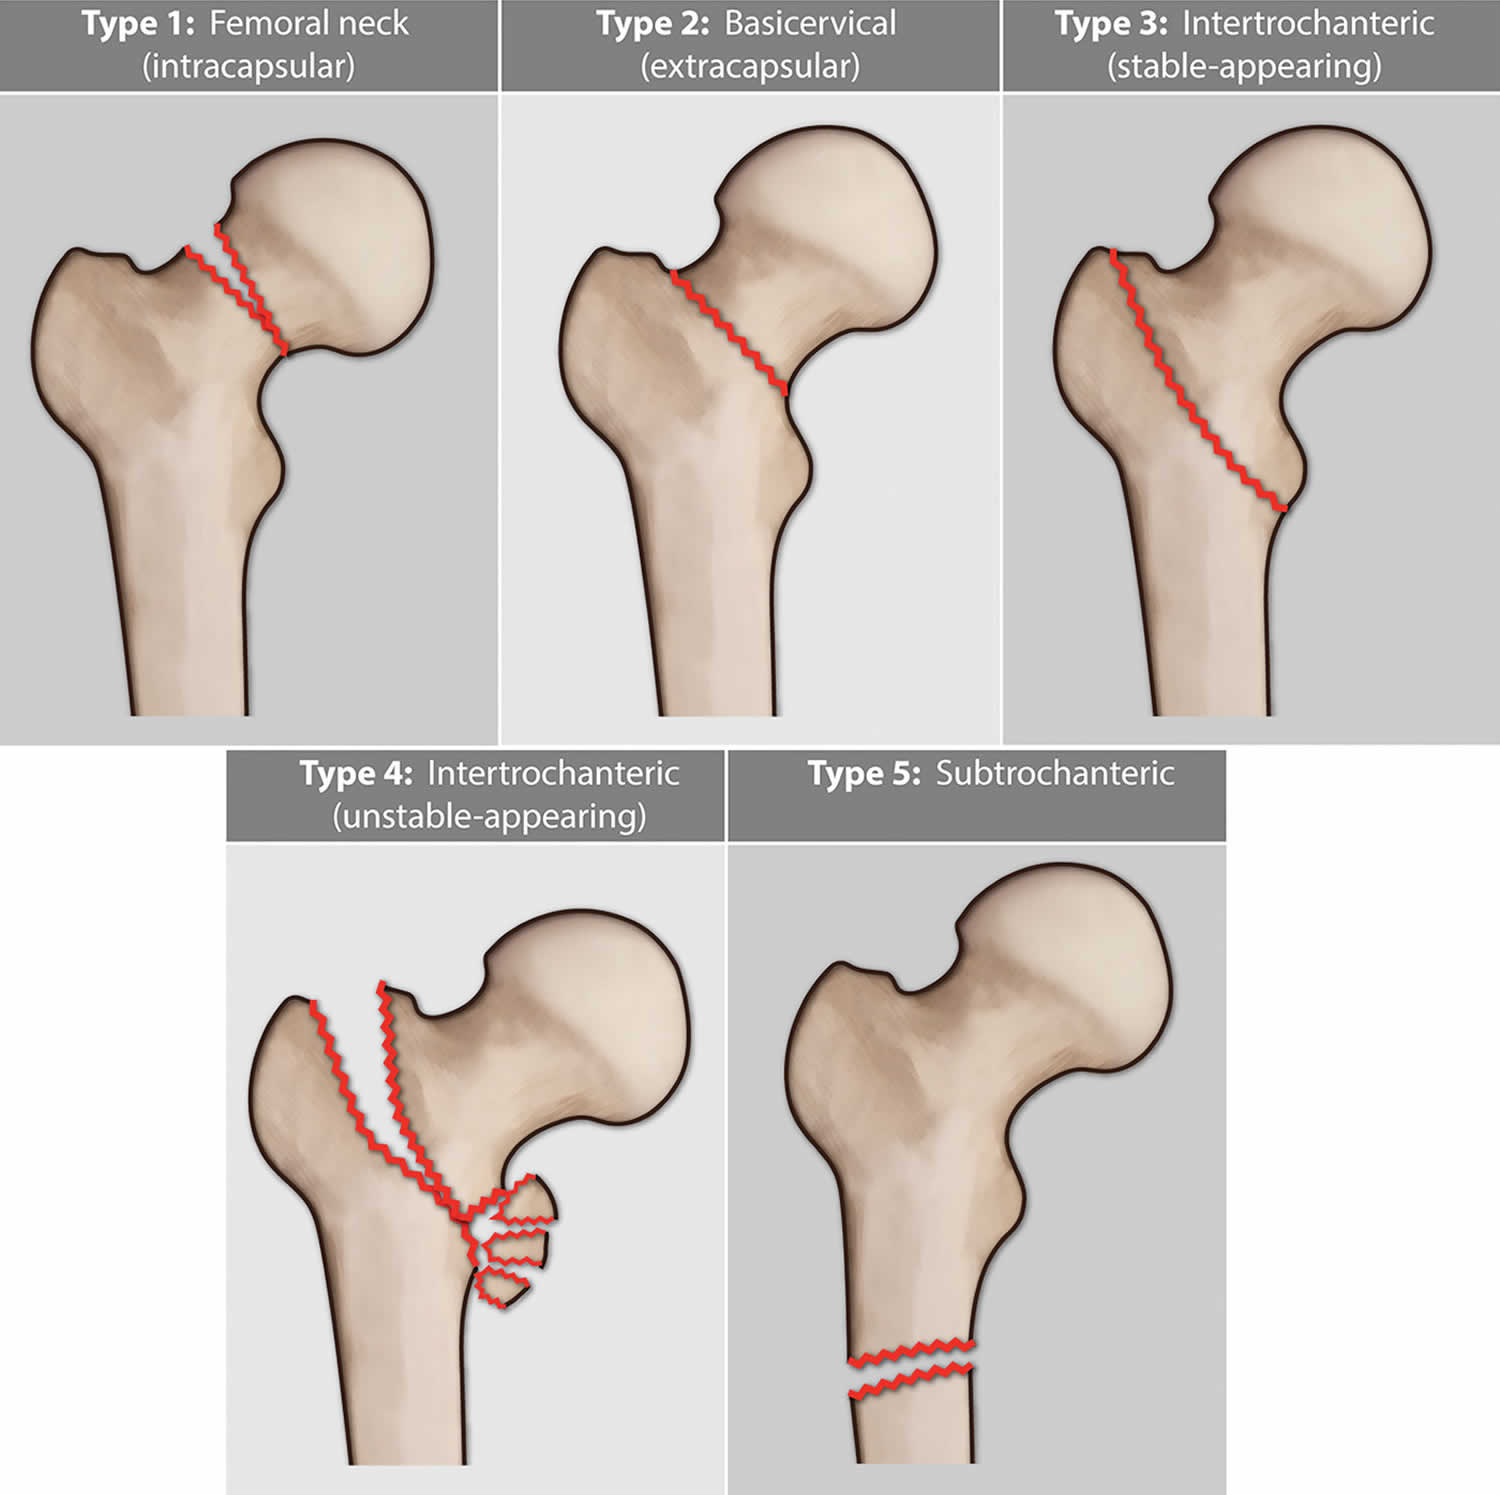 intertrochanteric fracture classification